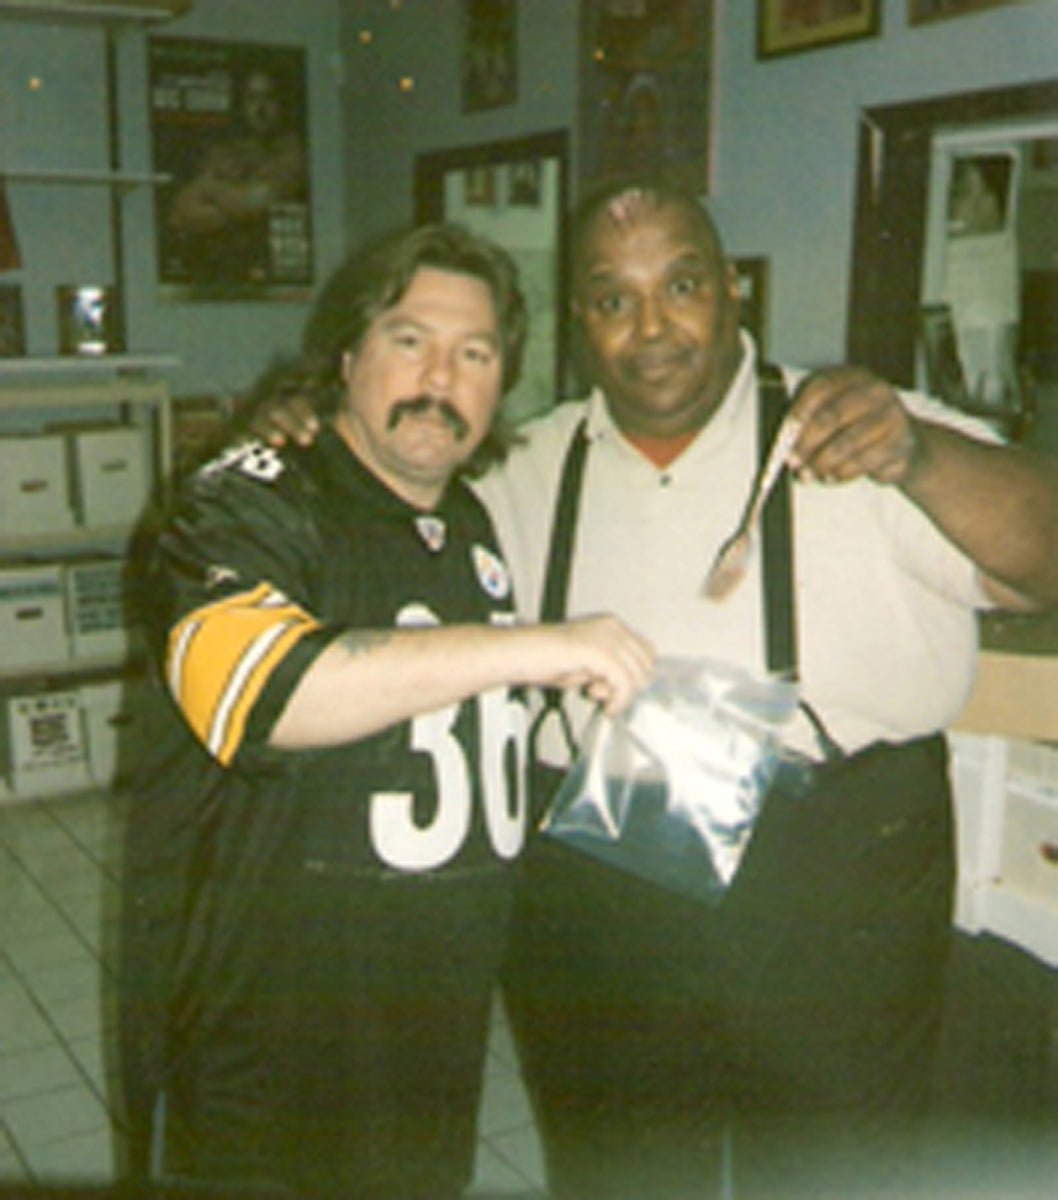 AM758  Mr. USA Tony Atlas Abdullah the Butcher Autographed Vintage Wrestling Magazine w/COA